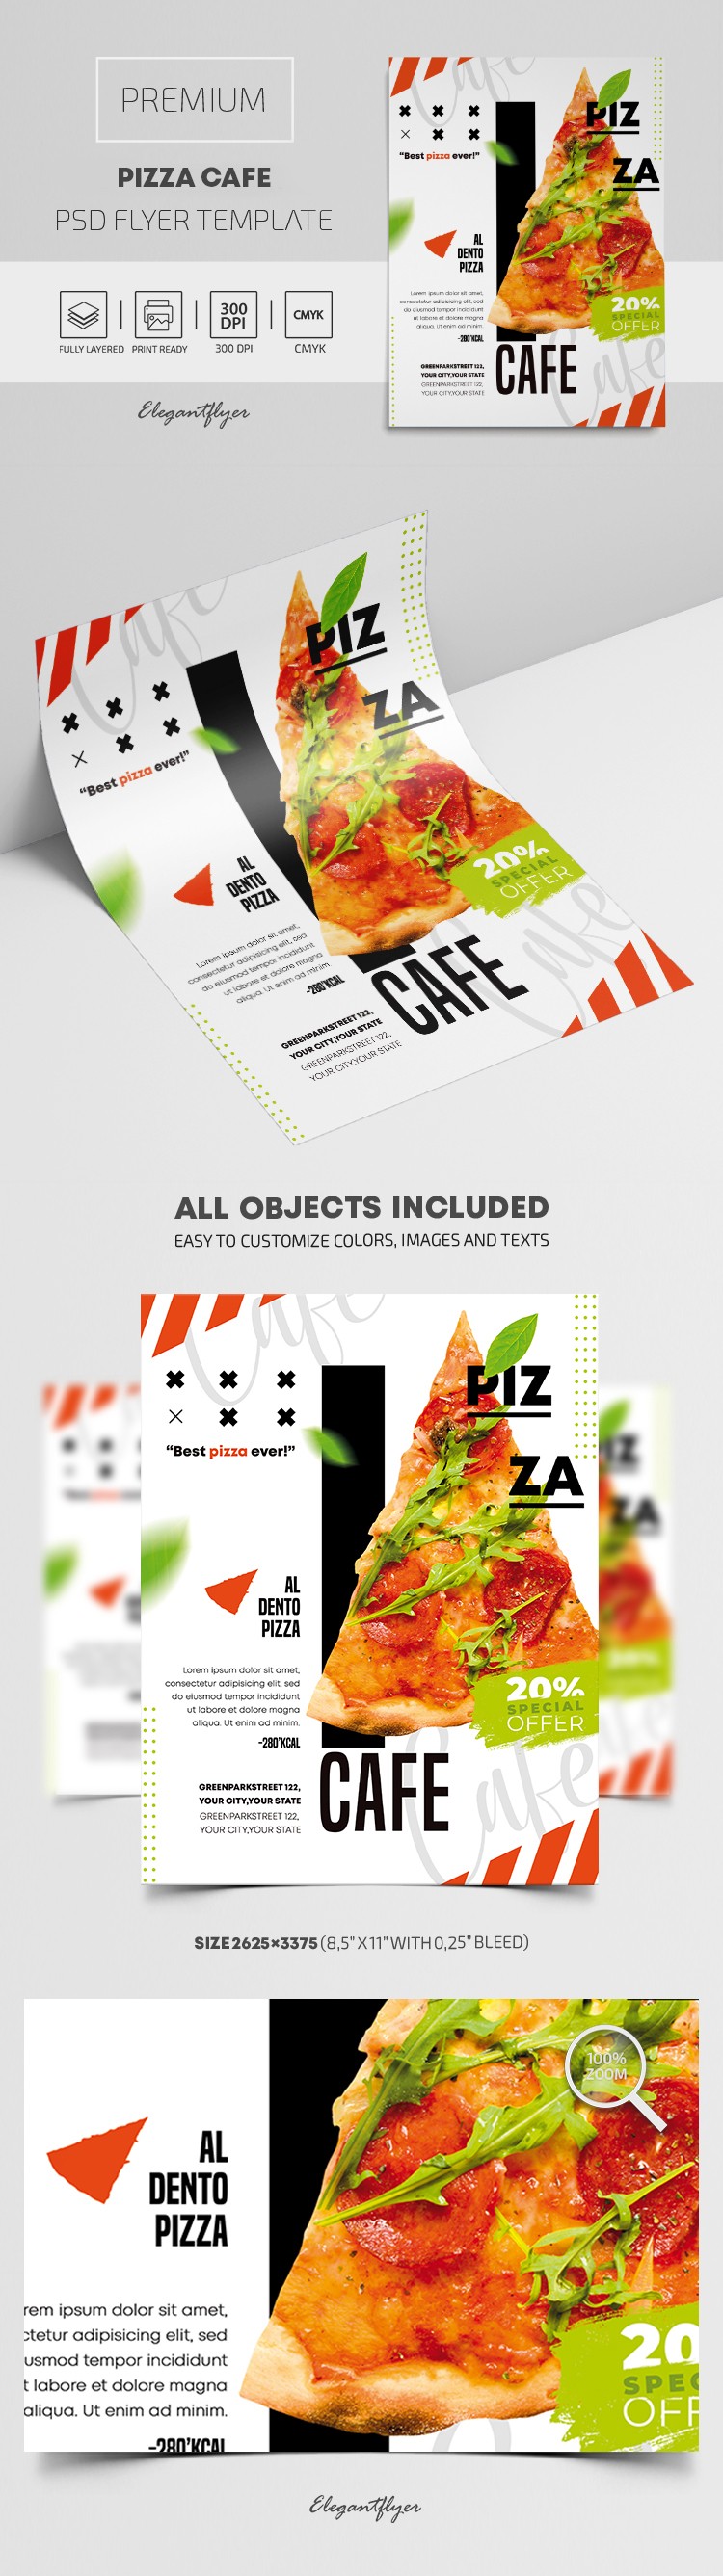 Pizza Cafe Flyer by ElegantFlyer